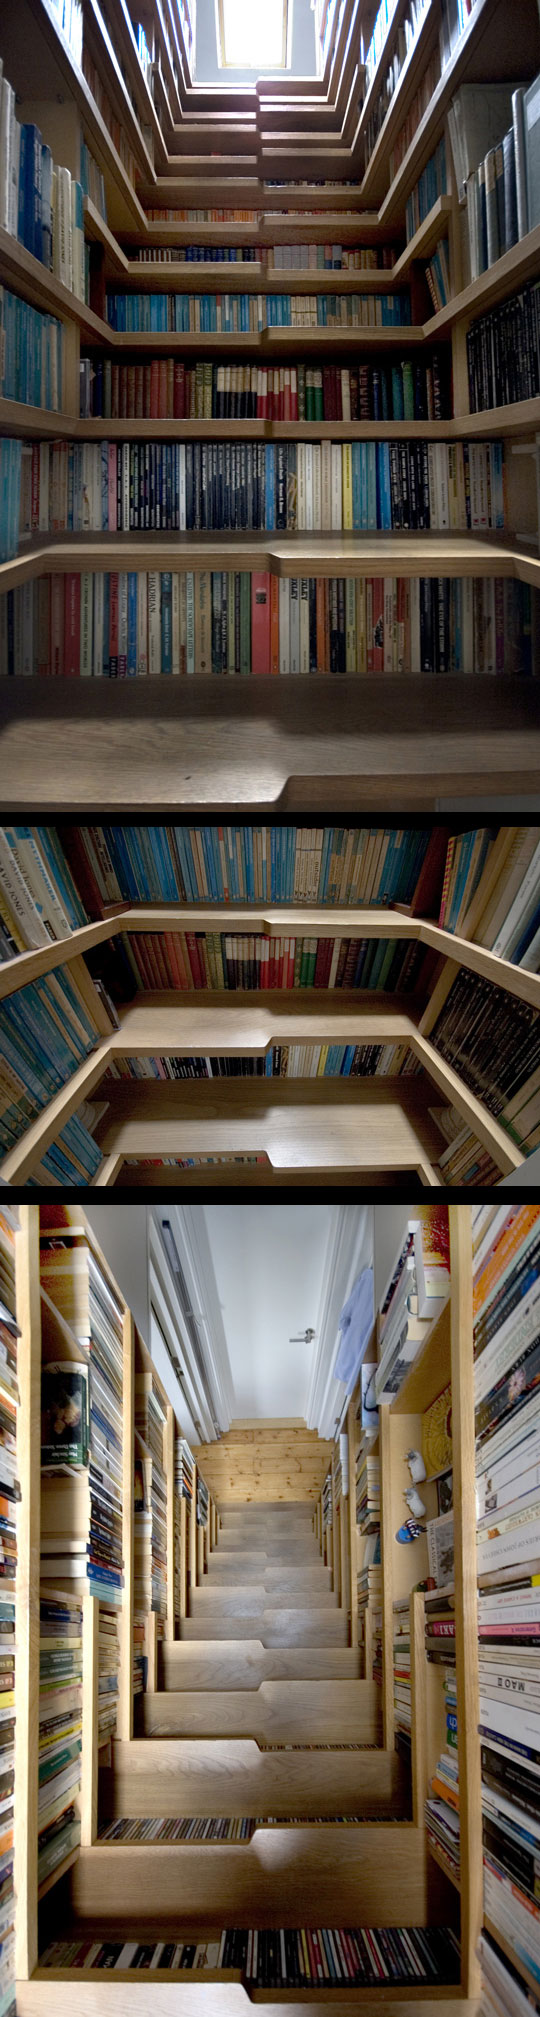 Full-room bookshelf with integral staircase